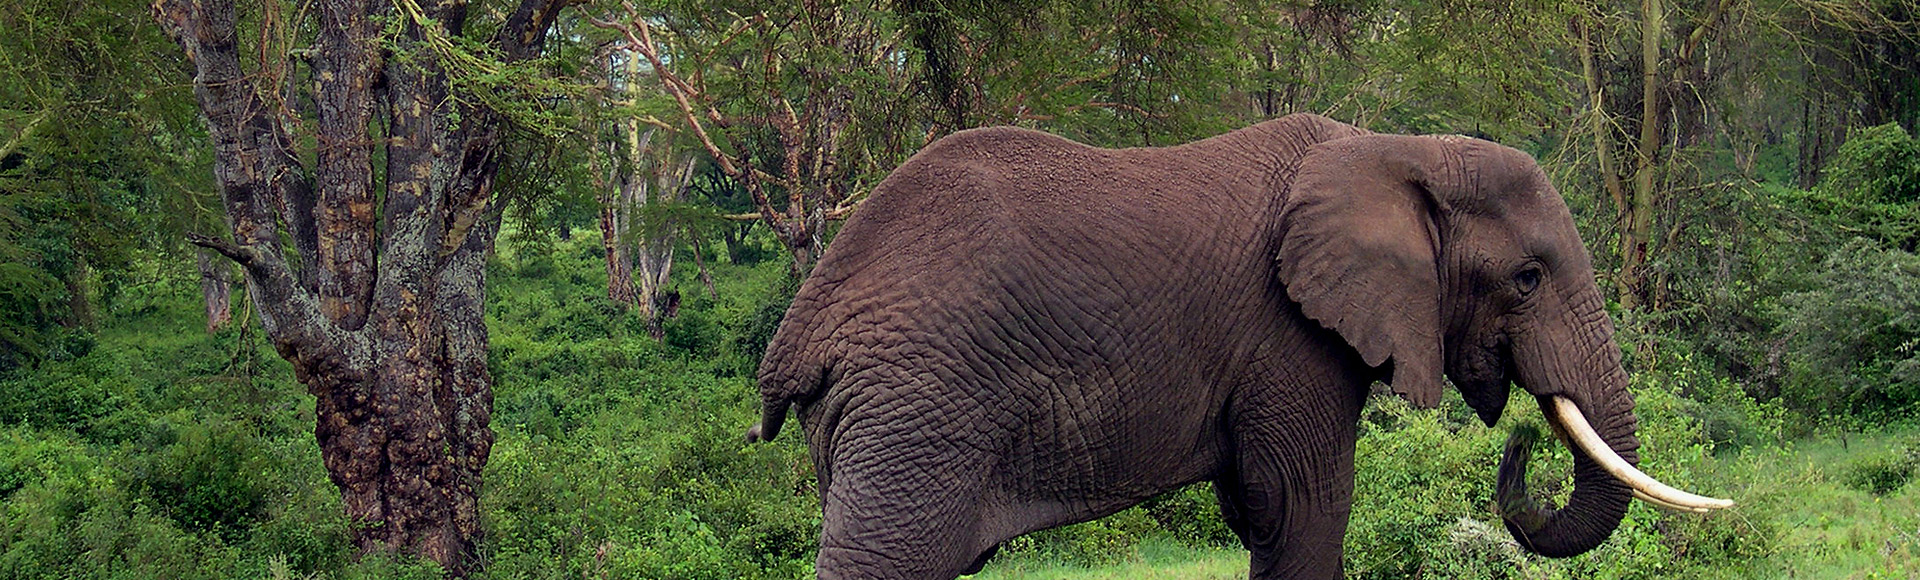 Elephants in the Tarangire